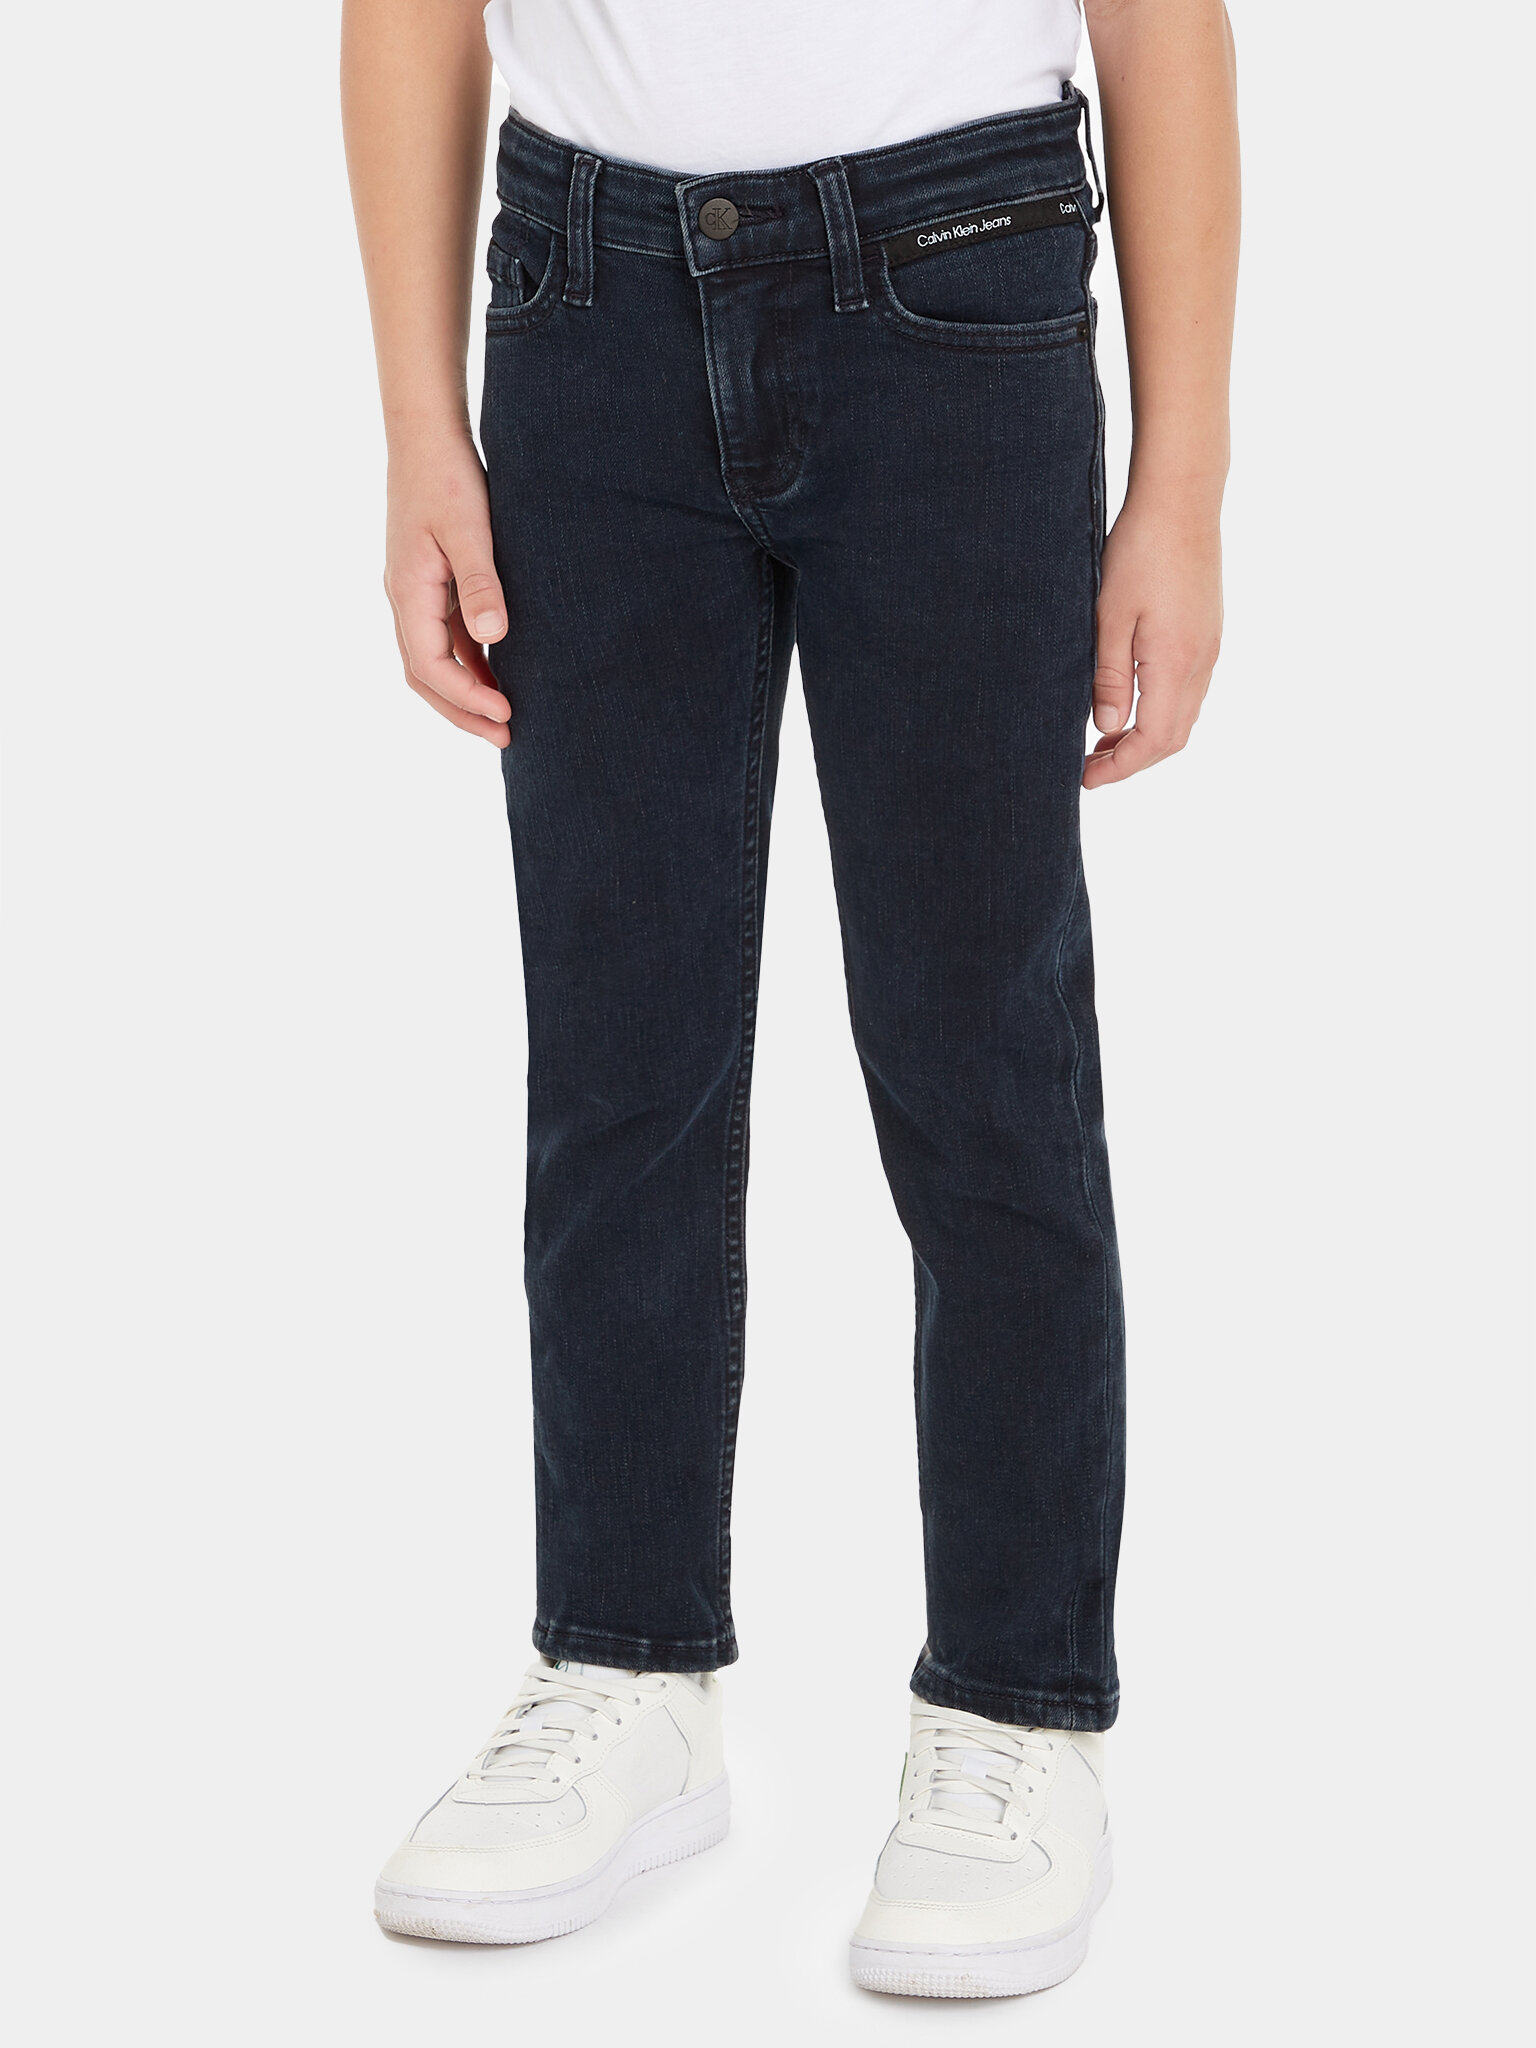 calvin-klein-jeans-jean-ib0ib01789-bleu-marine-slim-fit-0000302813810